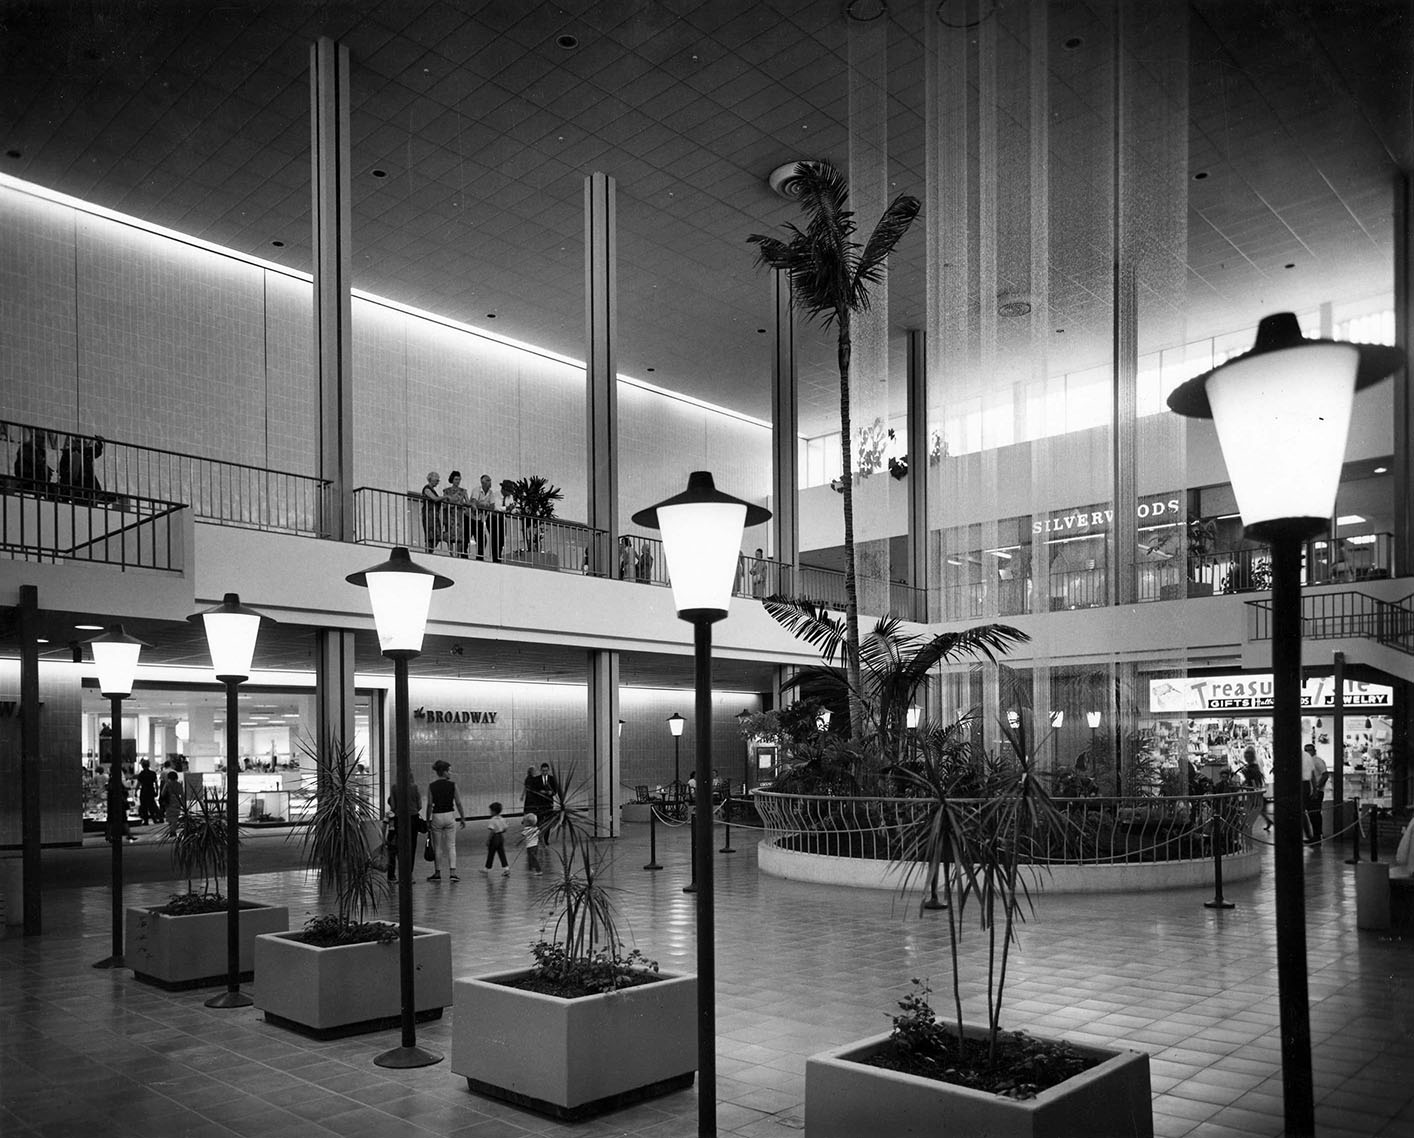 c. 1964 The May Company, Topanga Plaza